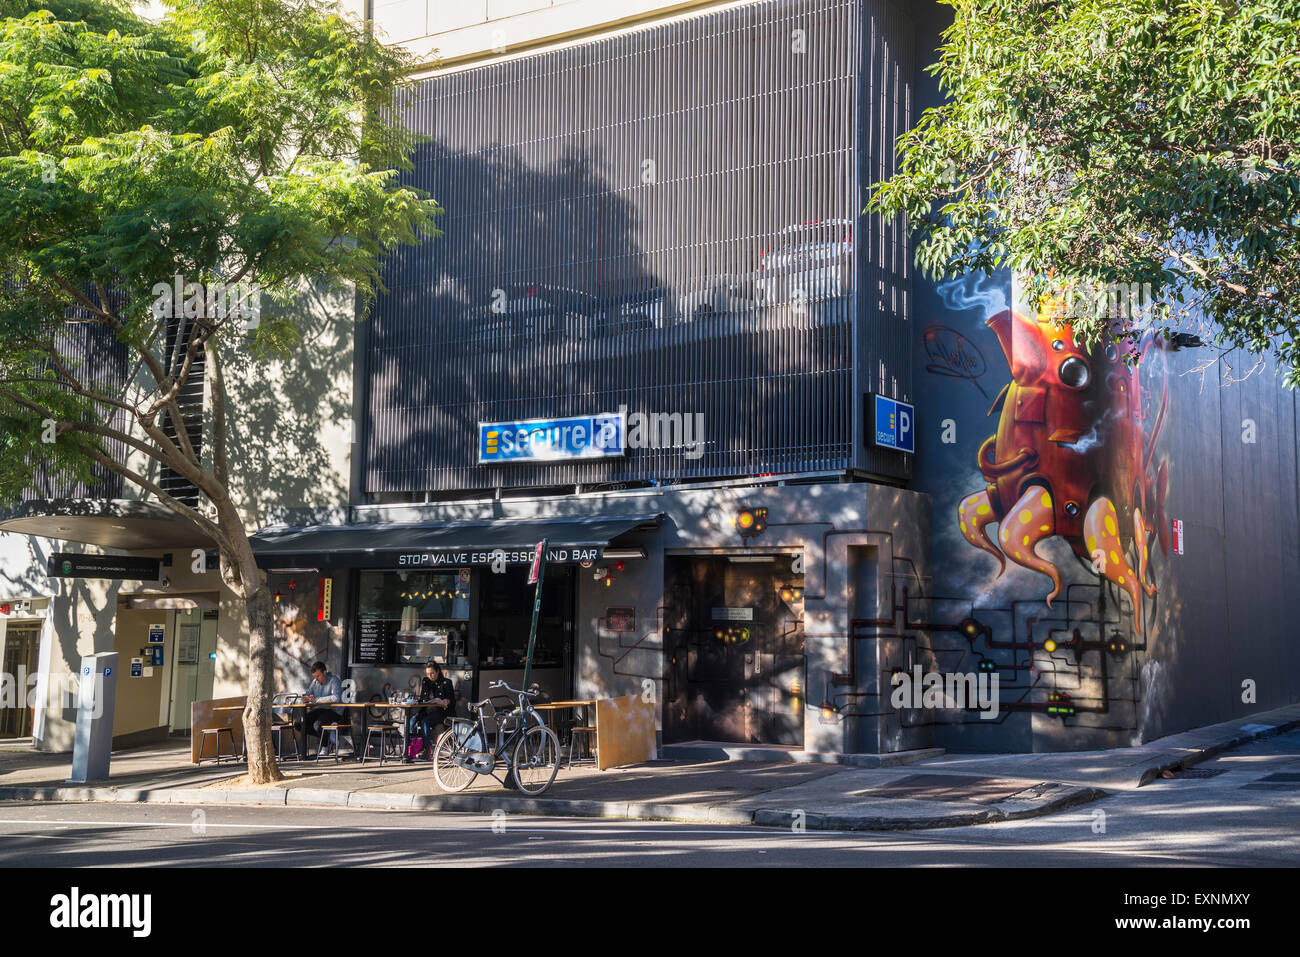 Cafe and Street art, Riley St, East Sydney, Australia Stock Photo